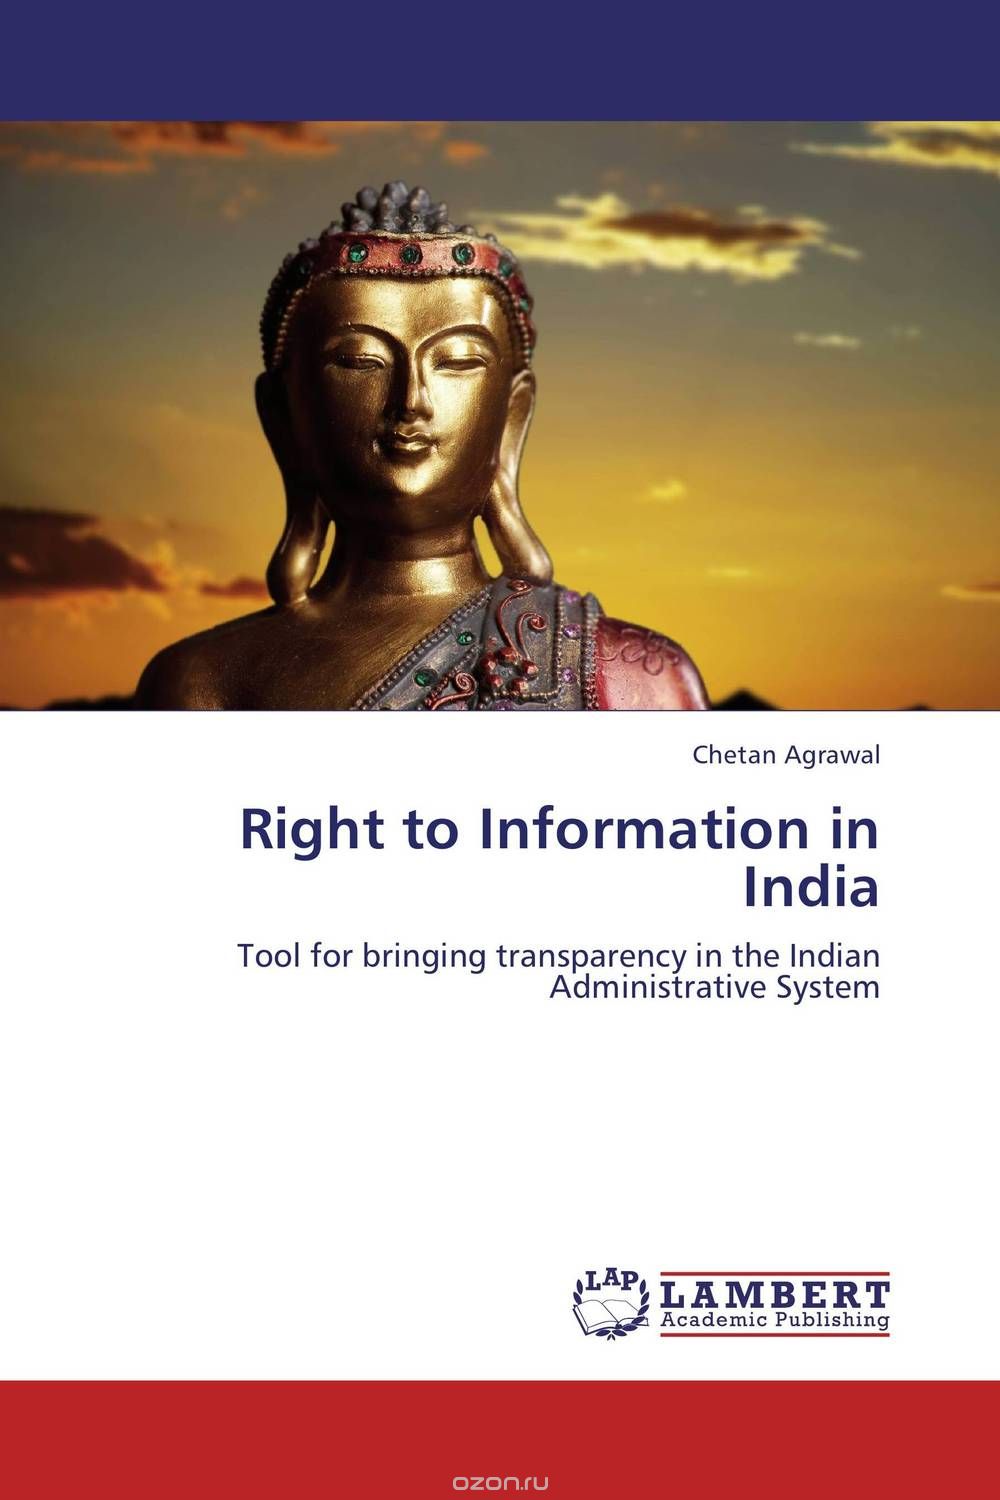 Скачать книгу "Right to Information in India"